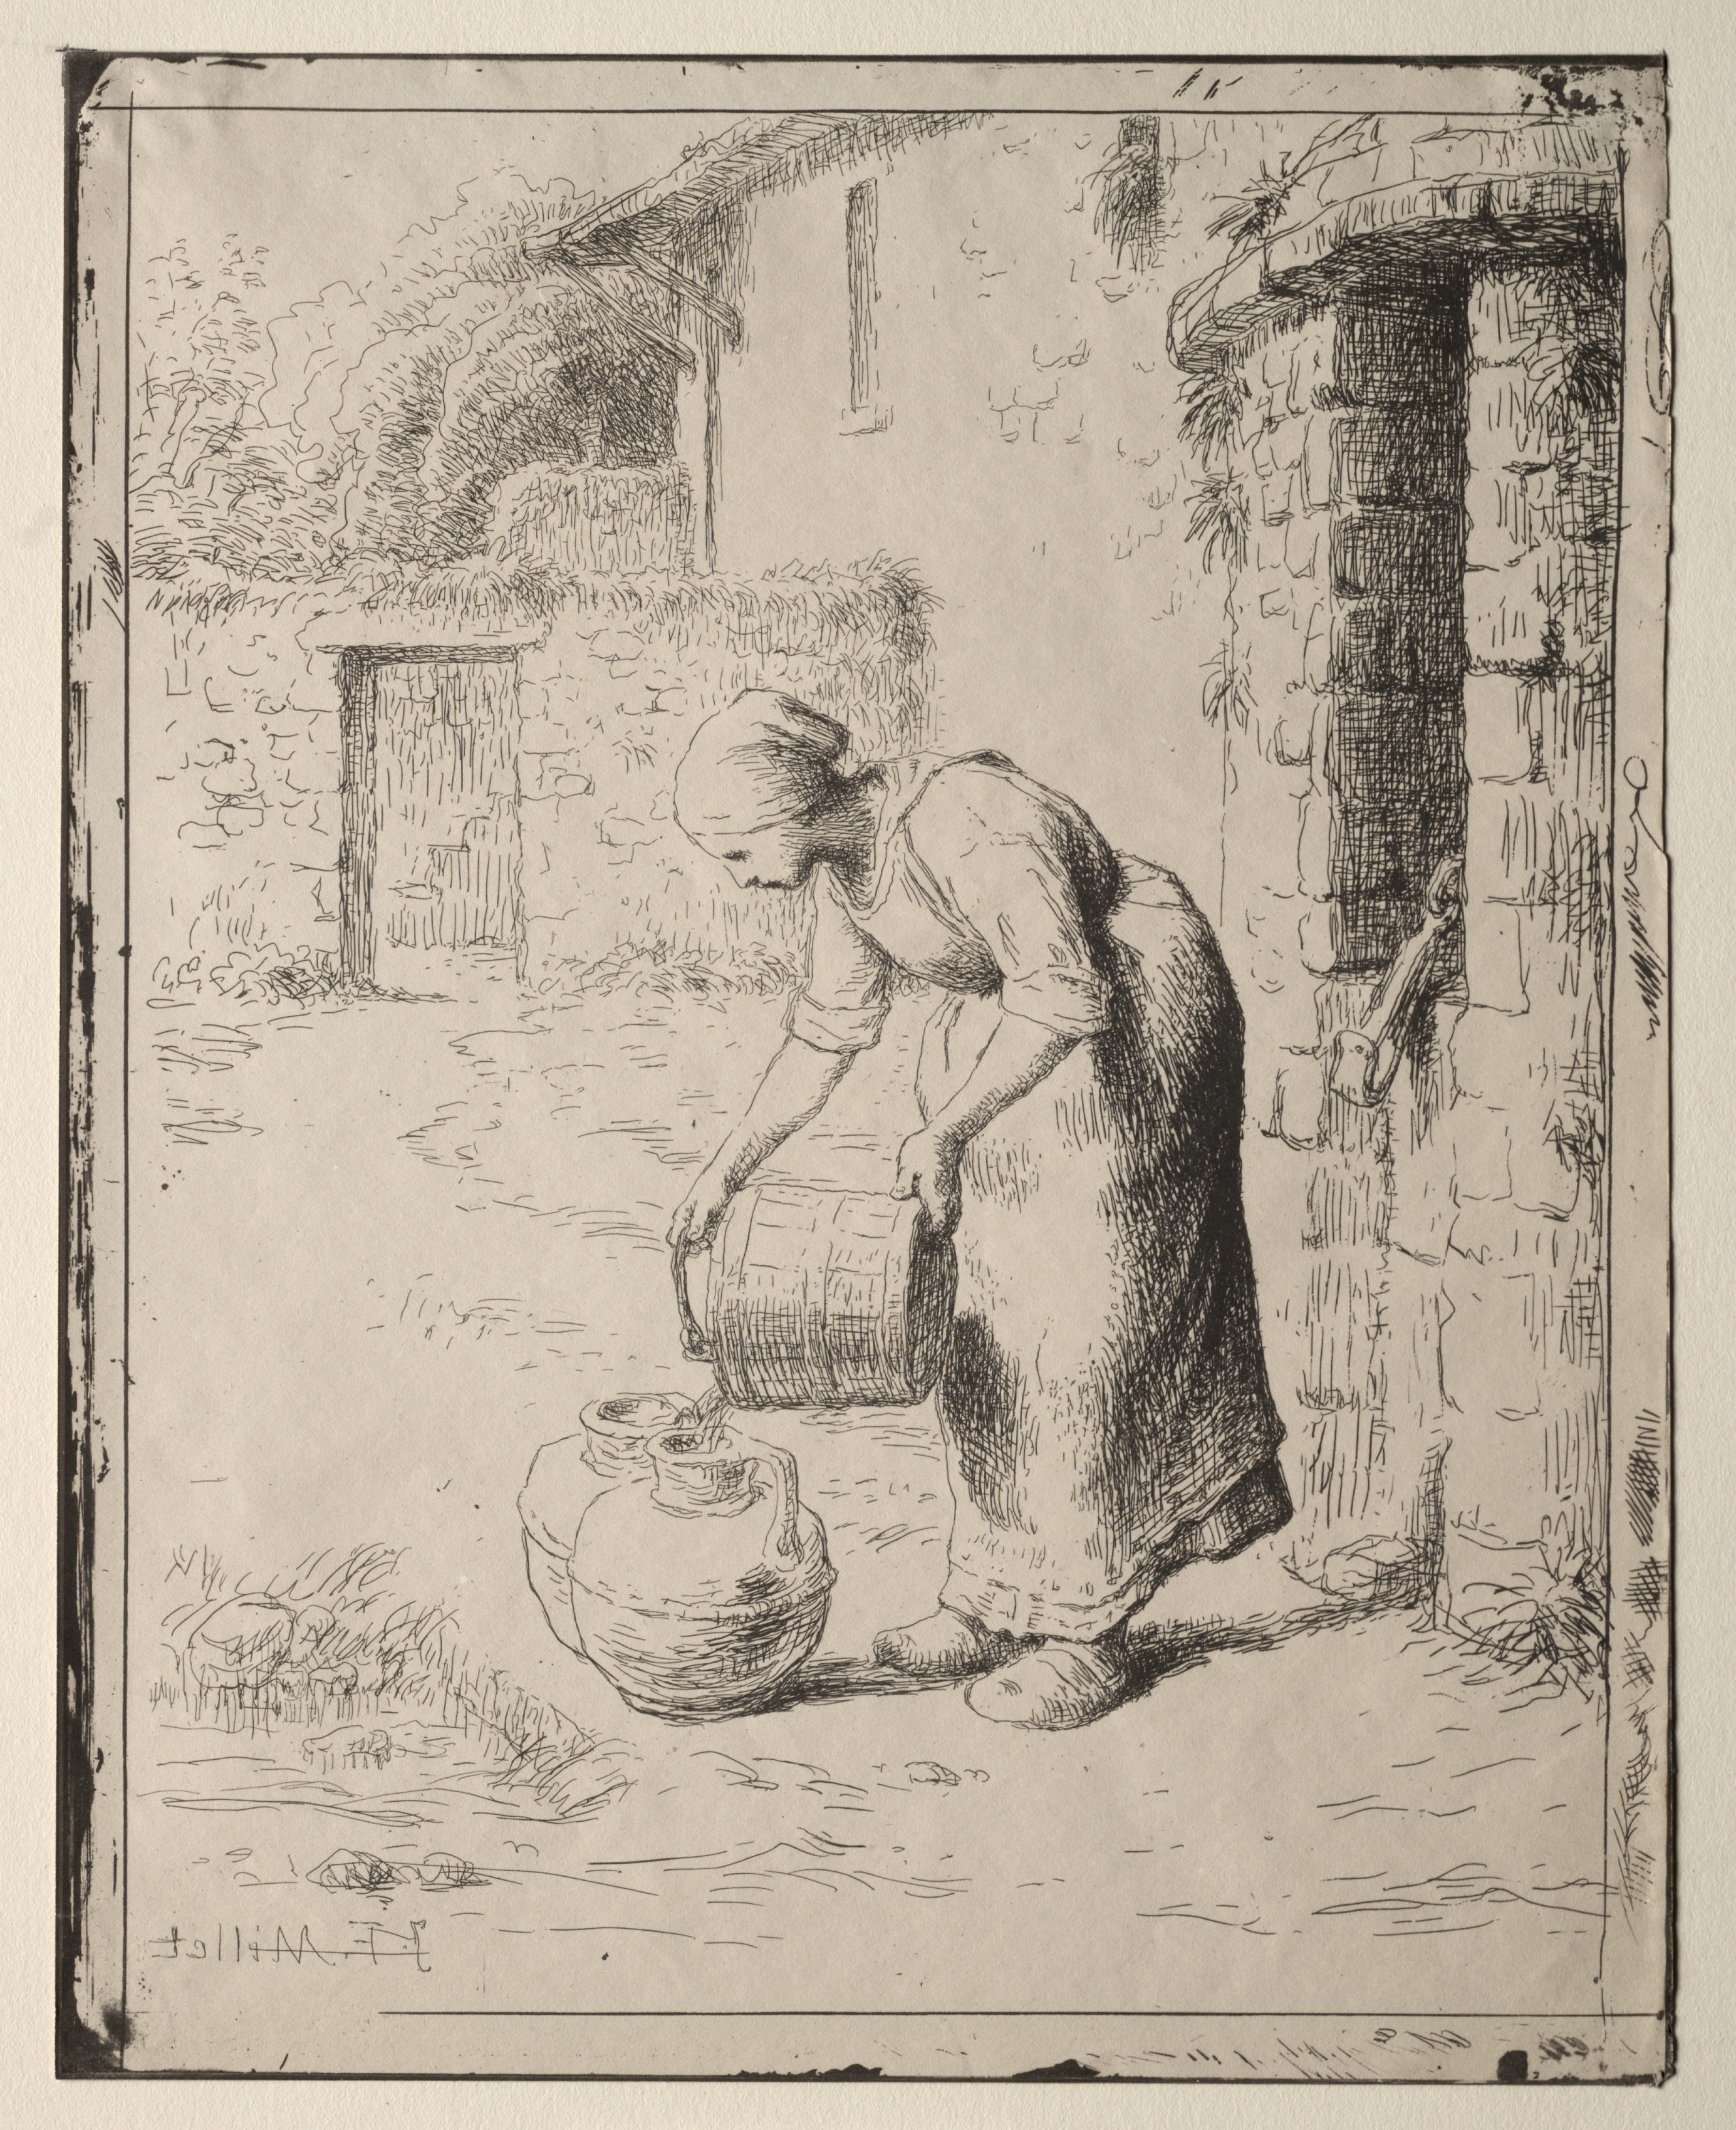 A Woman Emptying a Bucket